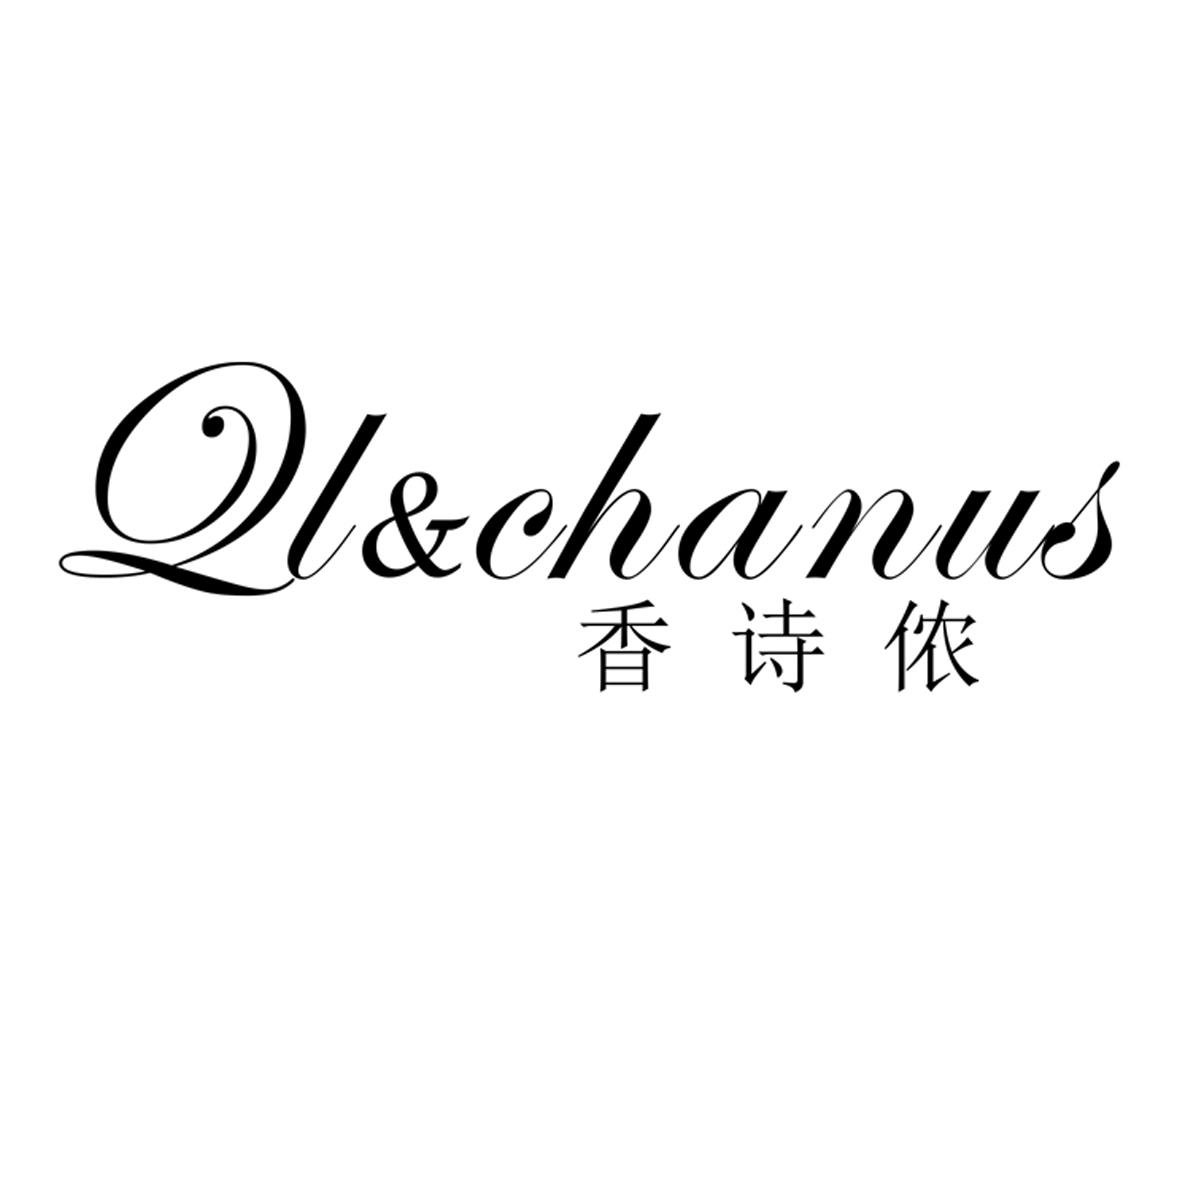 QL&chanus 香诗侬沐浴海绵商标转让费用买卖交易流程